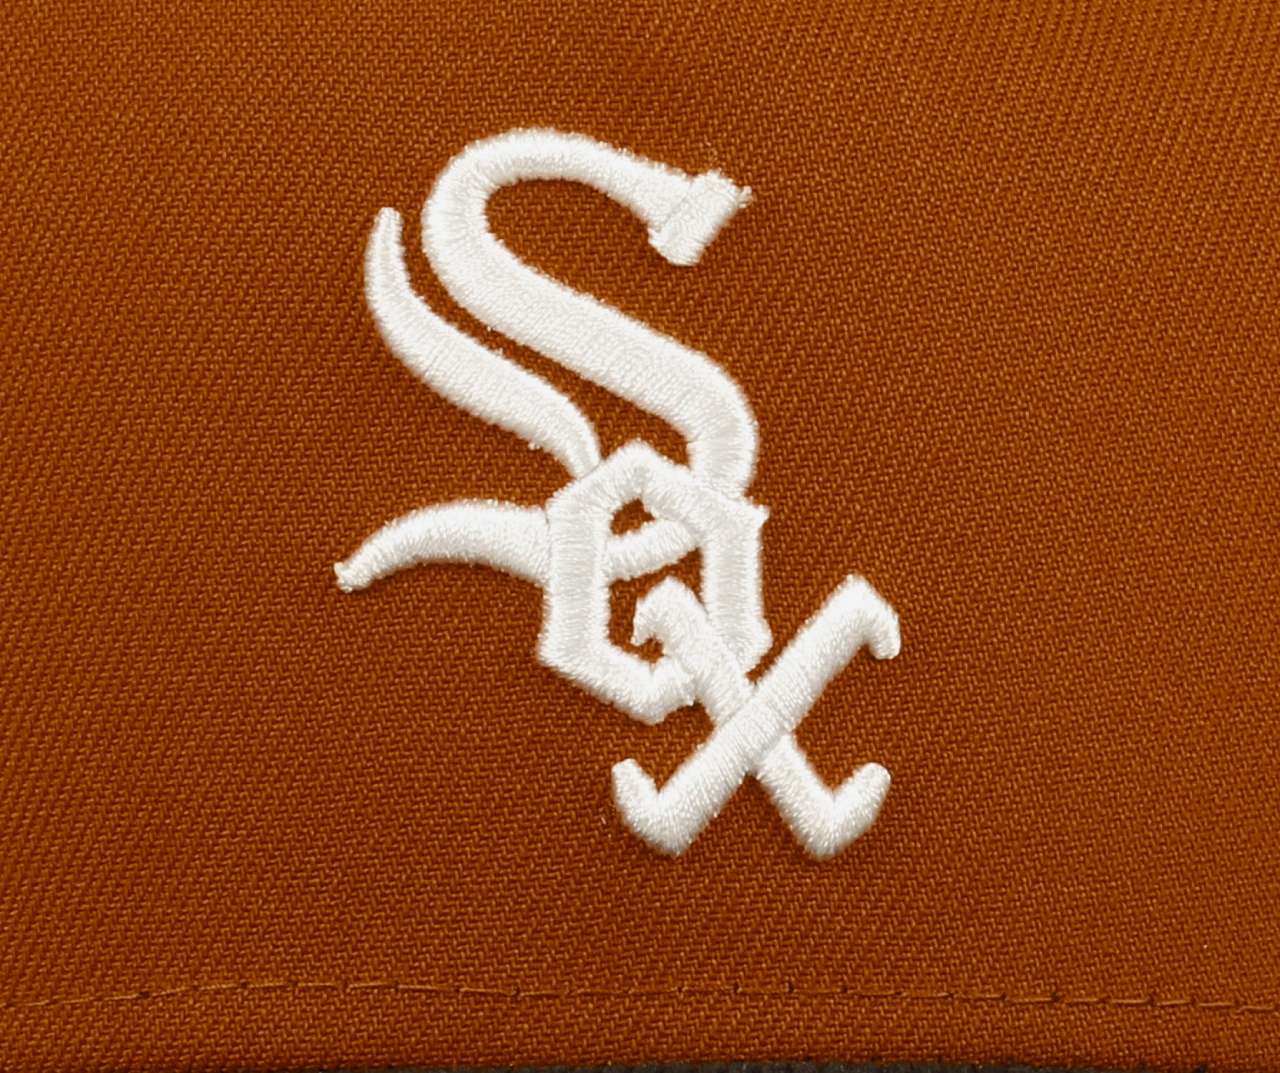 Chicago White Sox MLB Inaugural Year Sidepatch Orange Black Cord 9Forty A-Frame Snapback Cap New Era